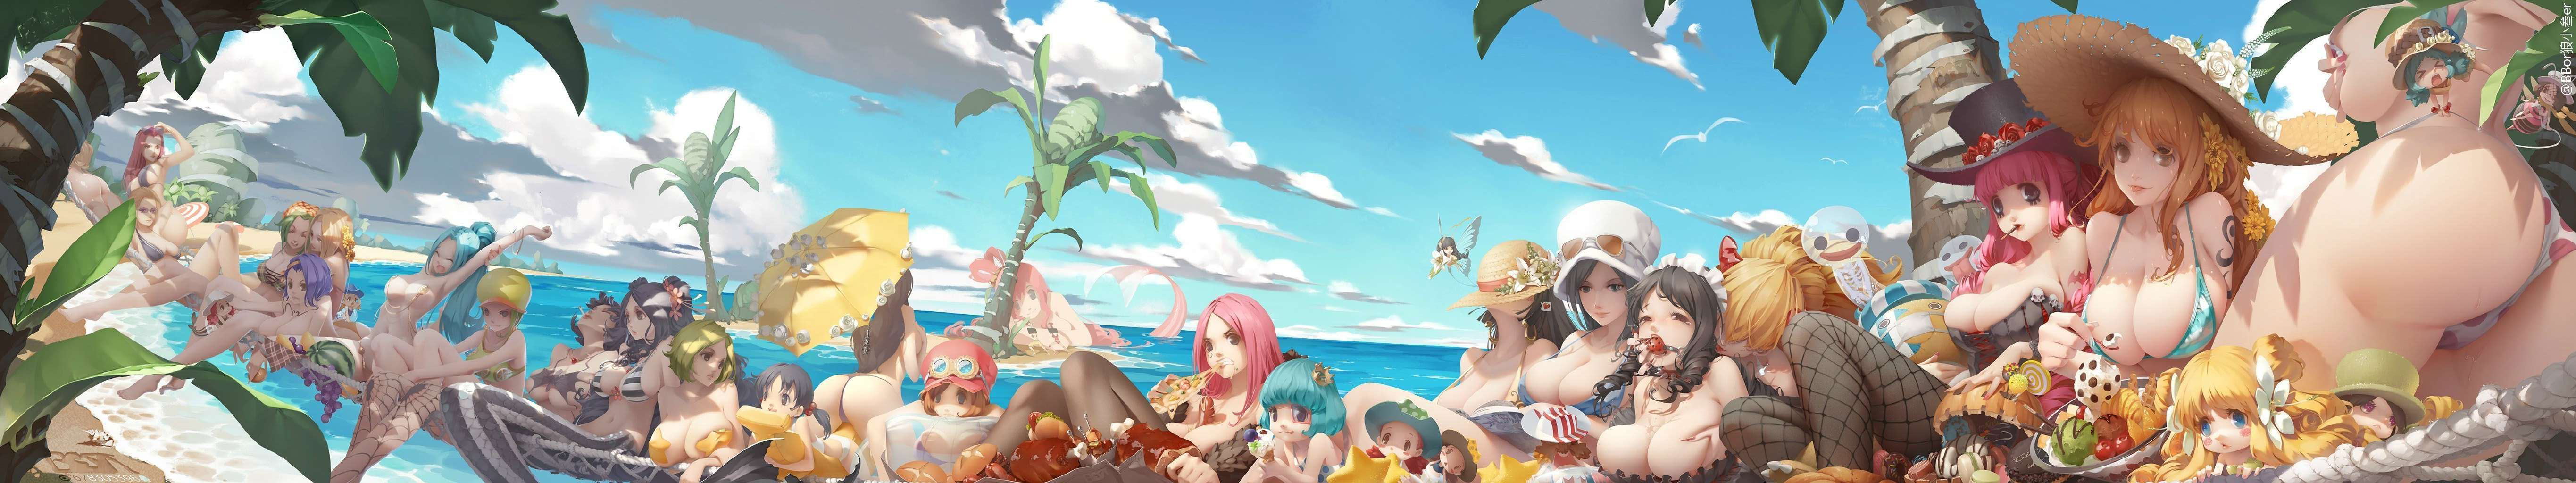 Anime 5461x1024 anime One Piece B.Bor artwork anime girls beach bikini cleavage ass big boobs Nami Nico Robin fruit palm trees seashells group of women women on beach women outdoors